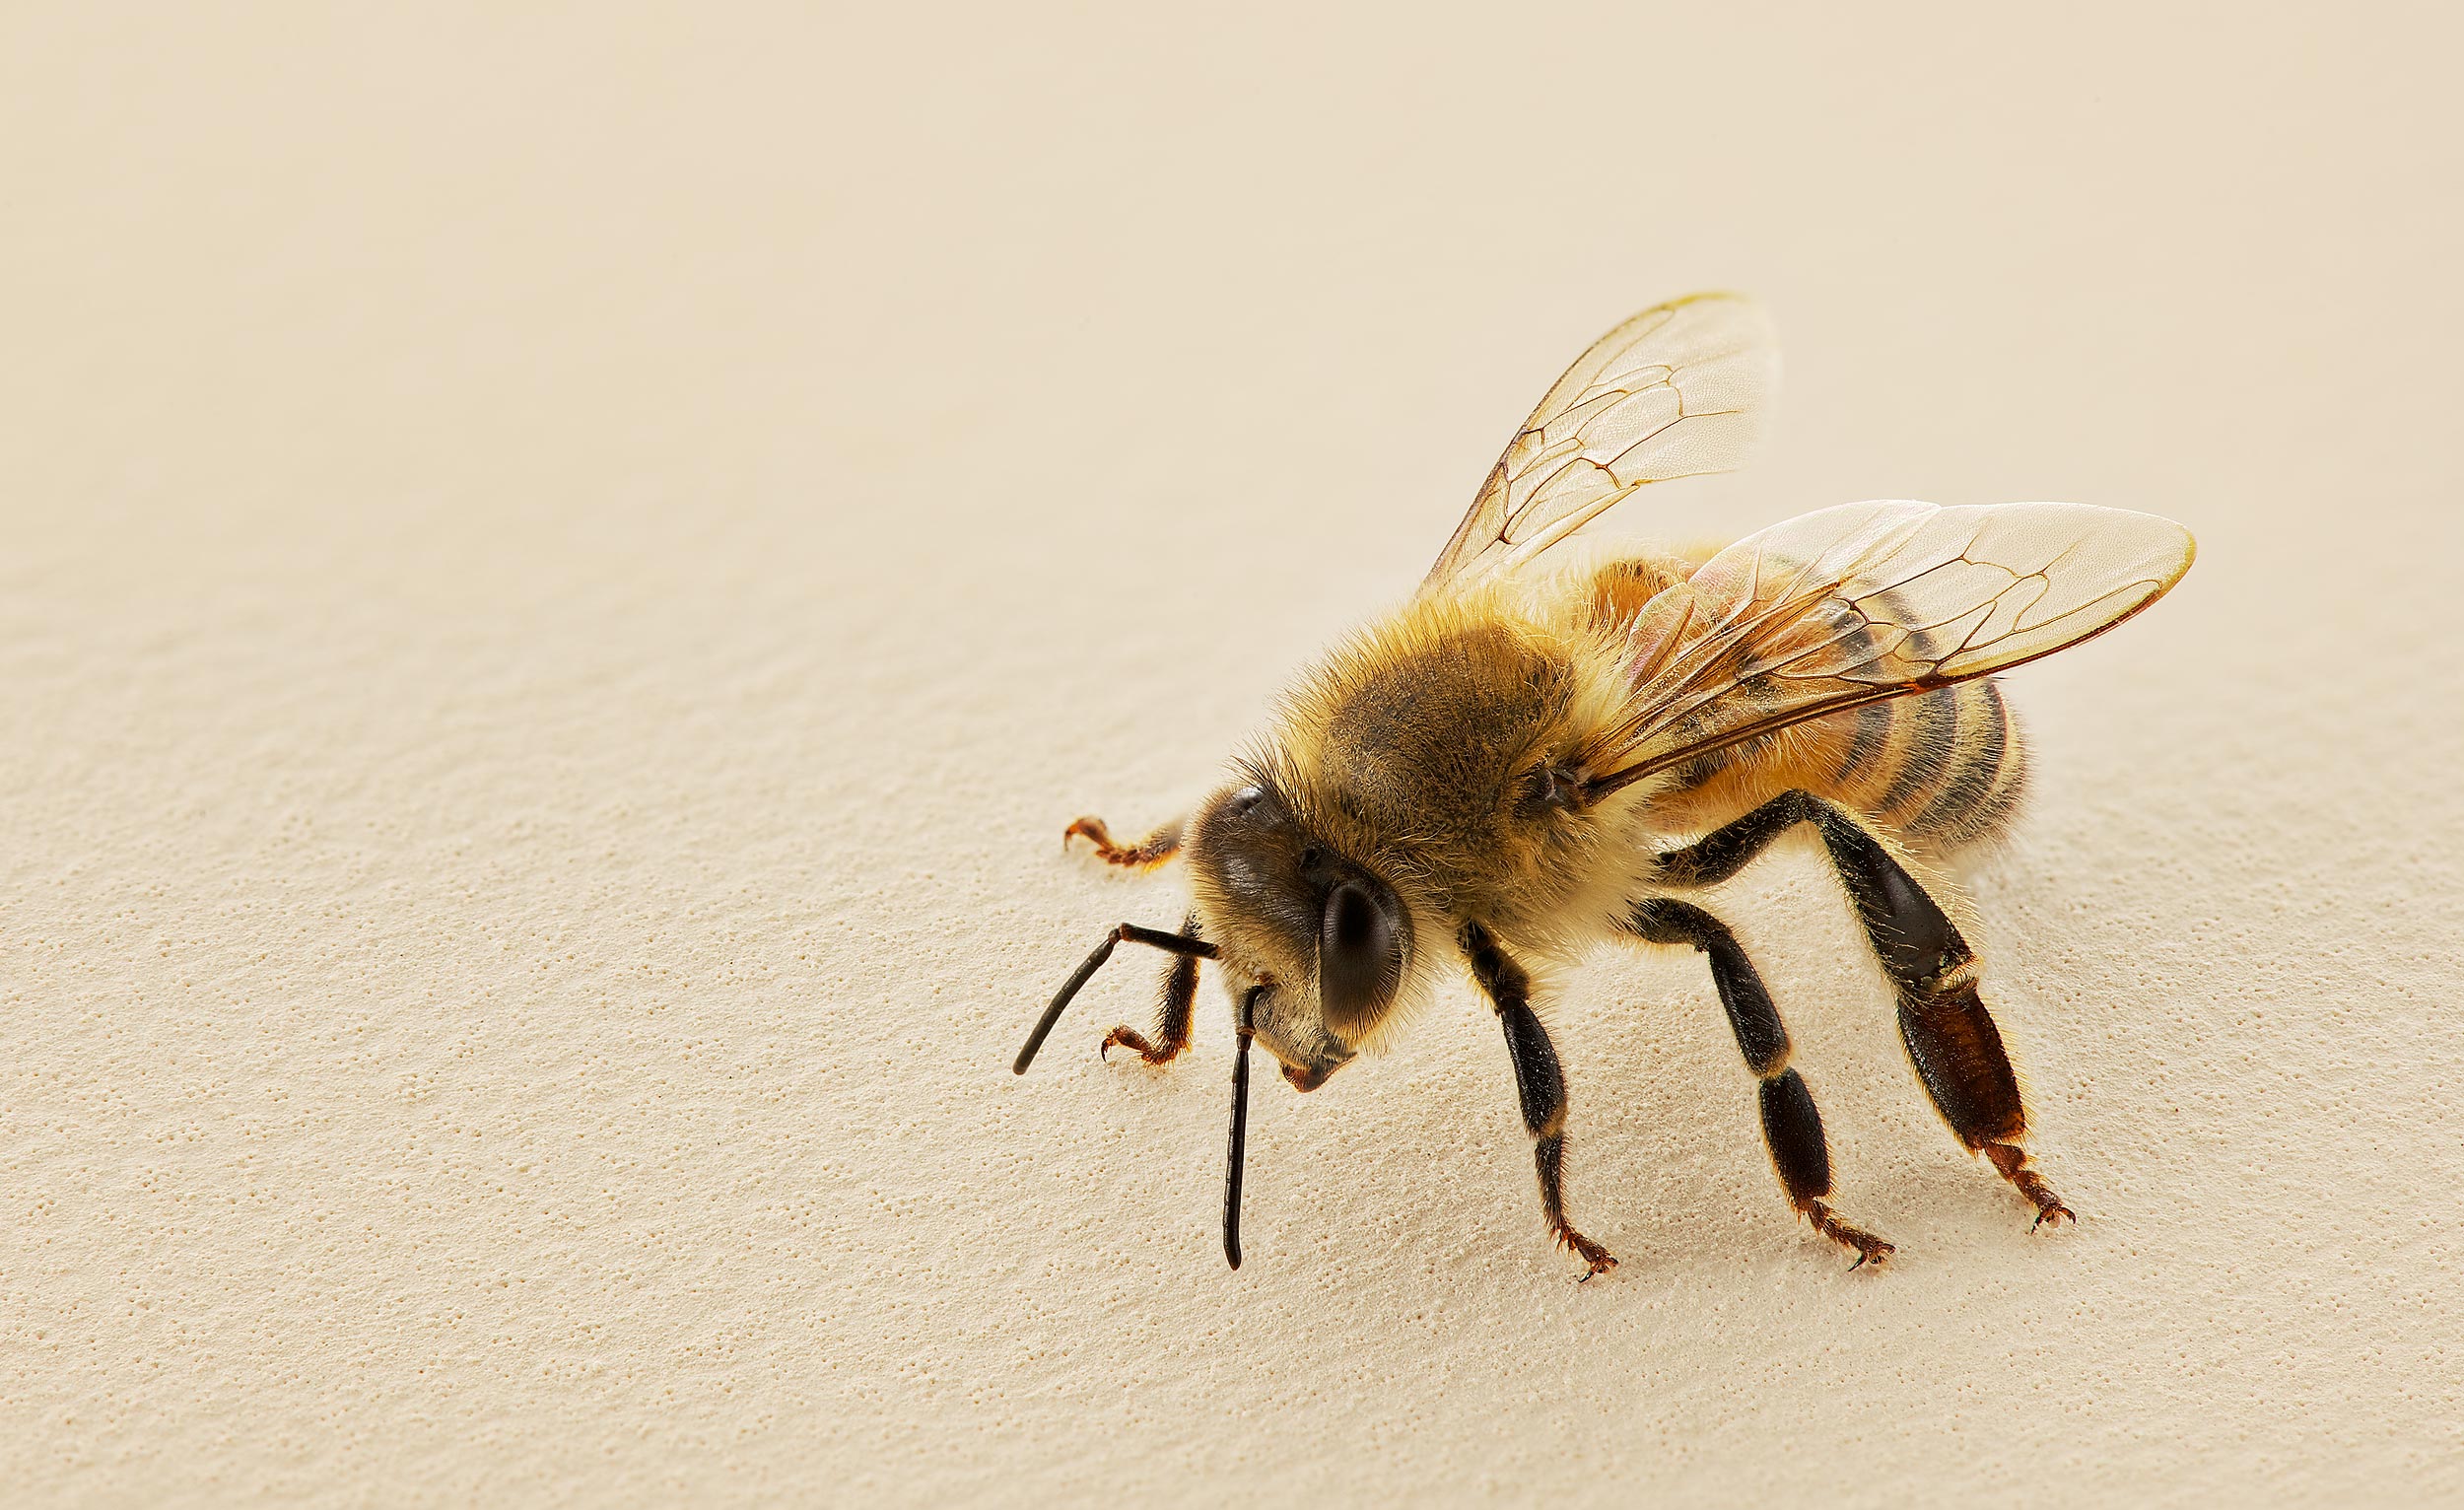 Macro Photography of a honey bee